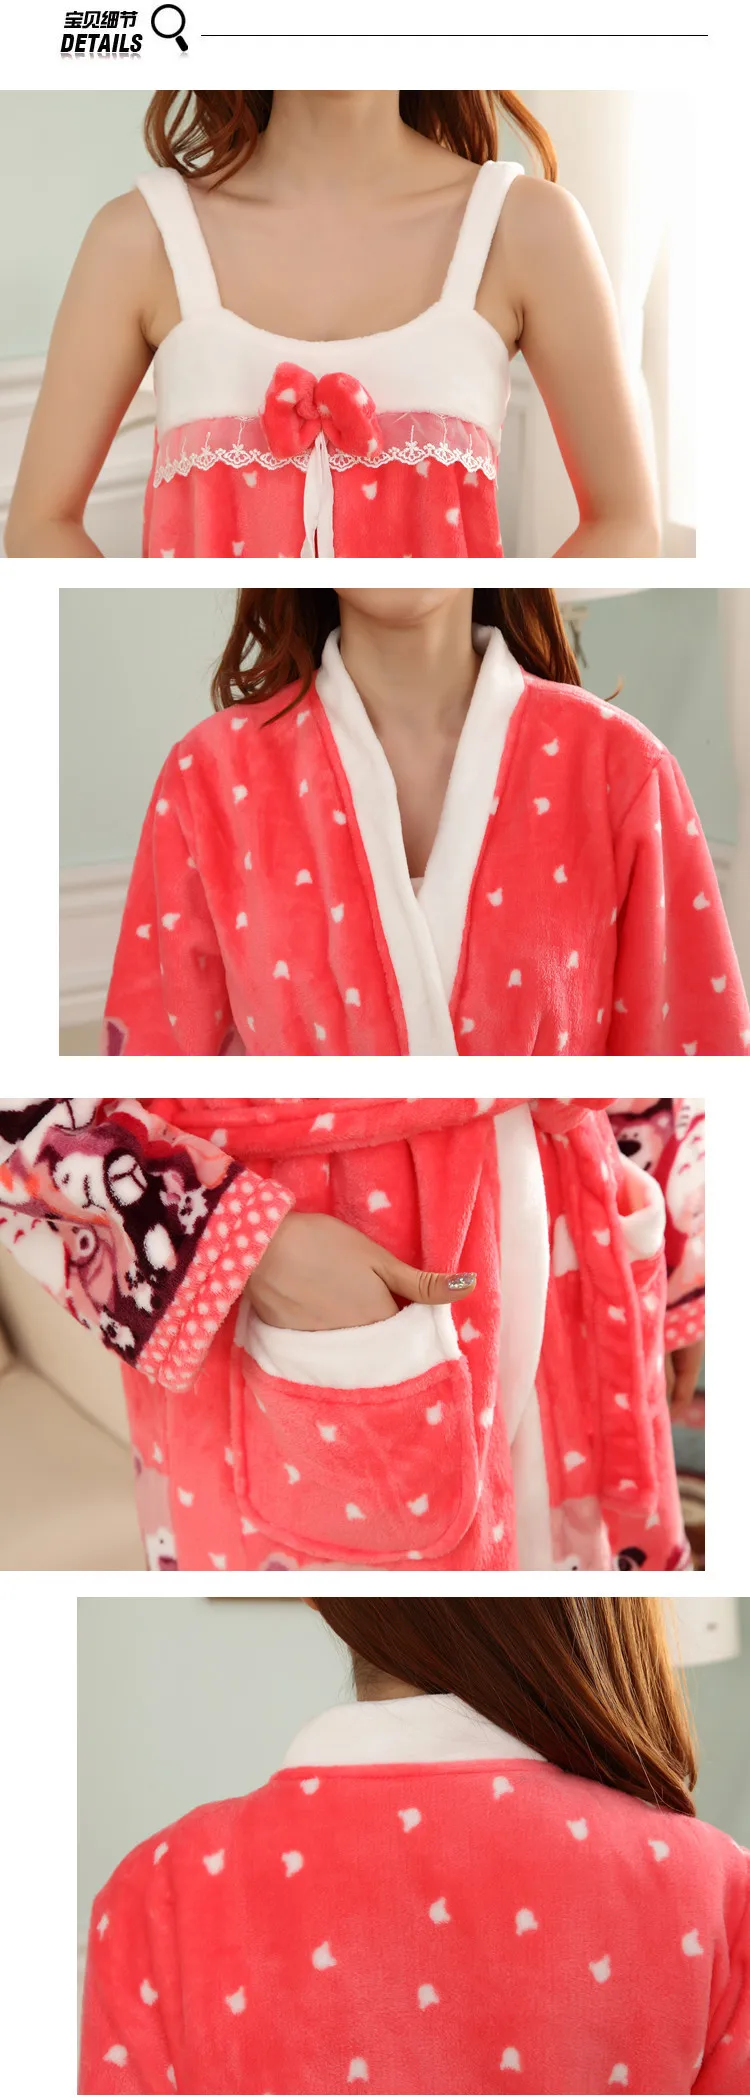 Новая Осенняя/зимняя женская одежда для сна фланелевая Ночная Рубашка домашняя одежда ночное белье для беременных и Ночная сорочка для беременных пижамы 16905